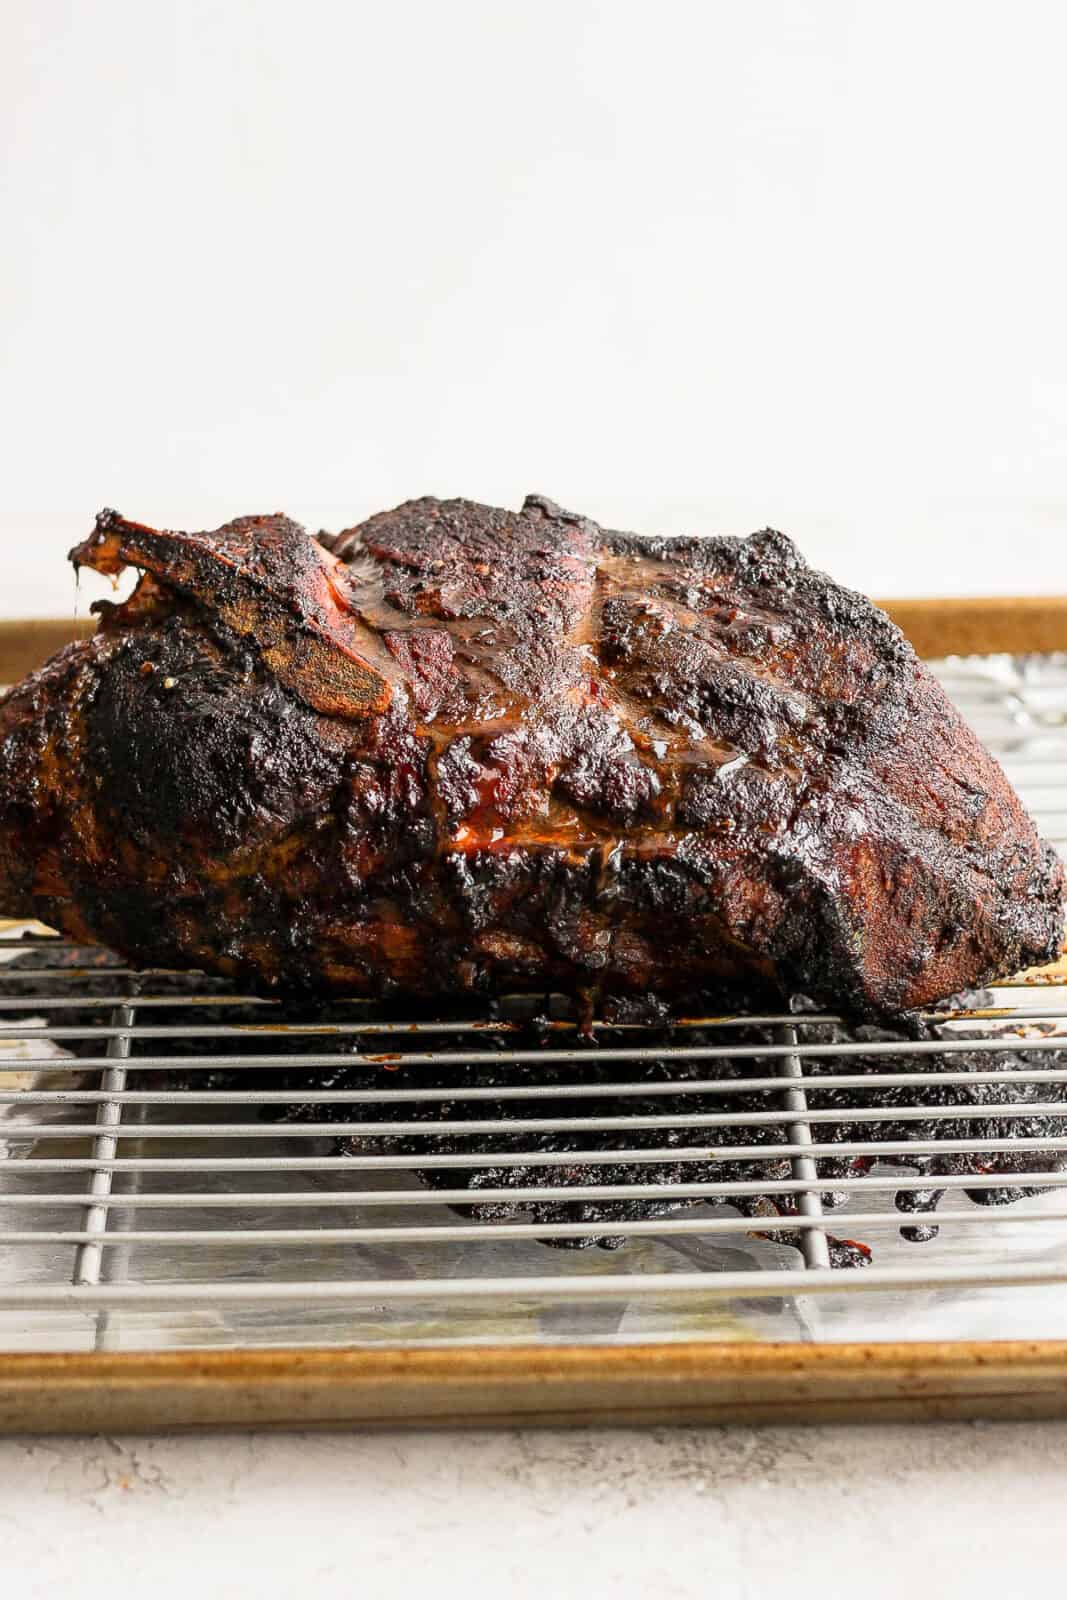 An oven roasted pork shoulder on a wire rack.